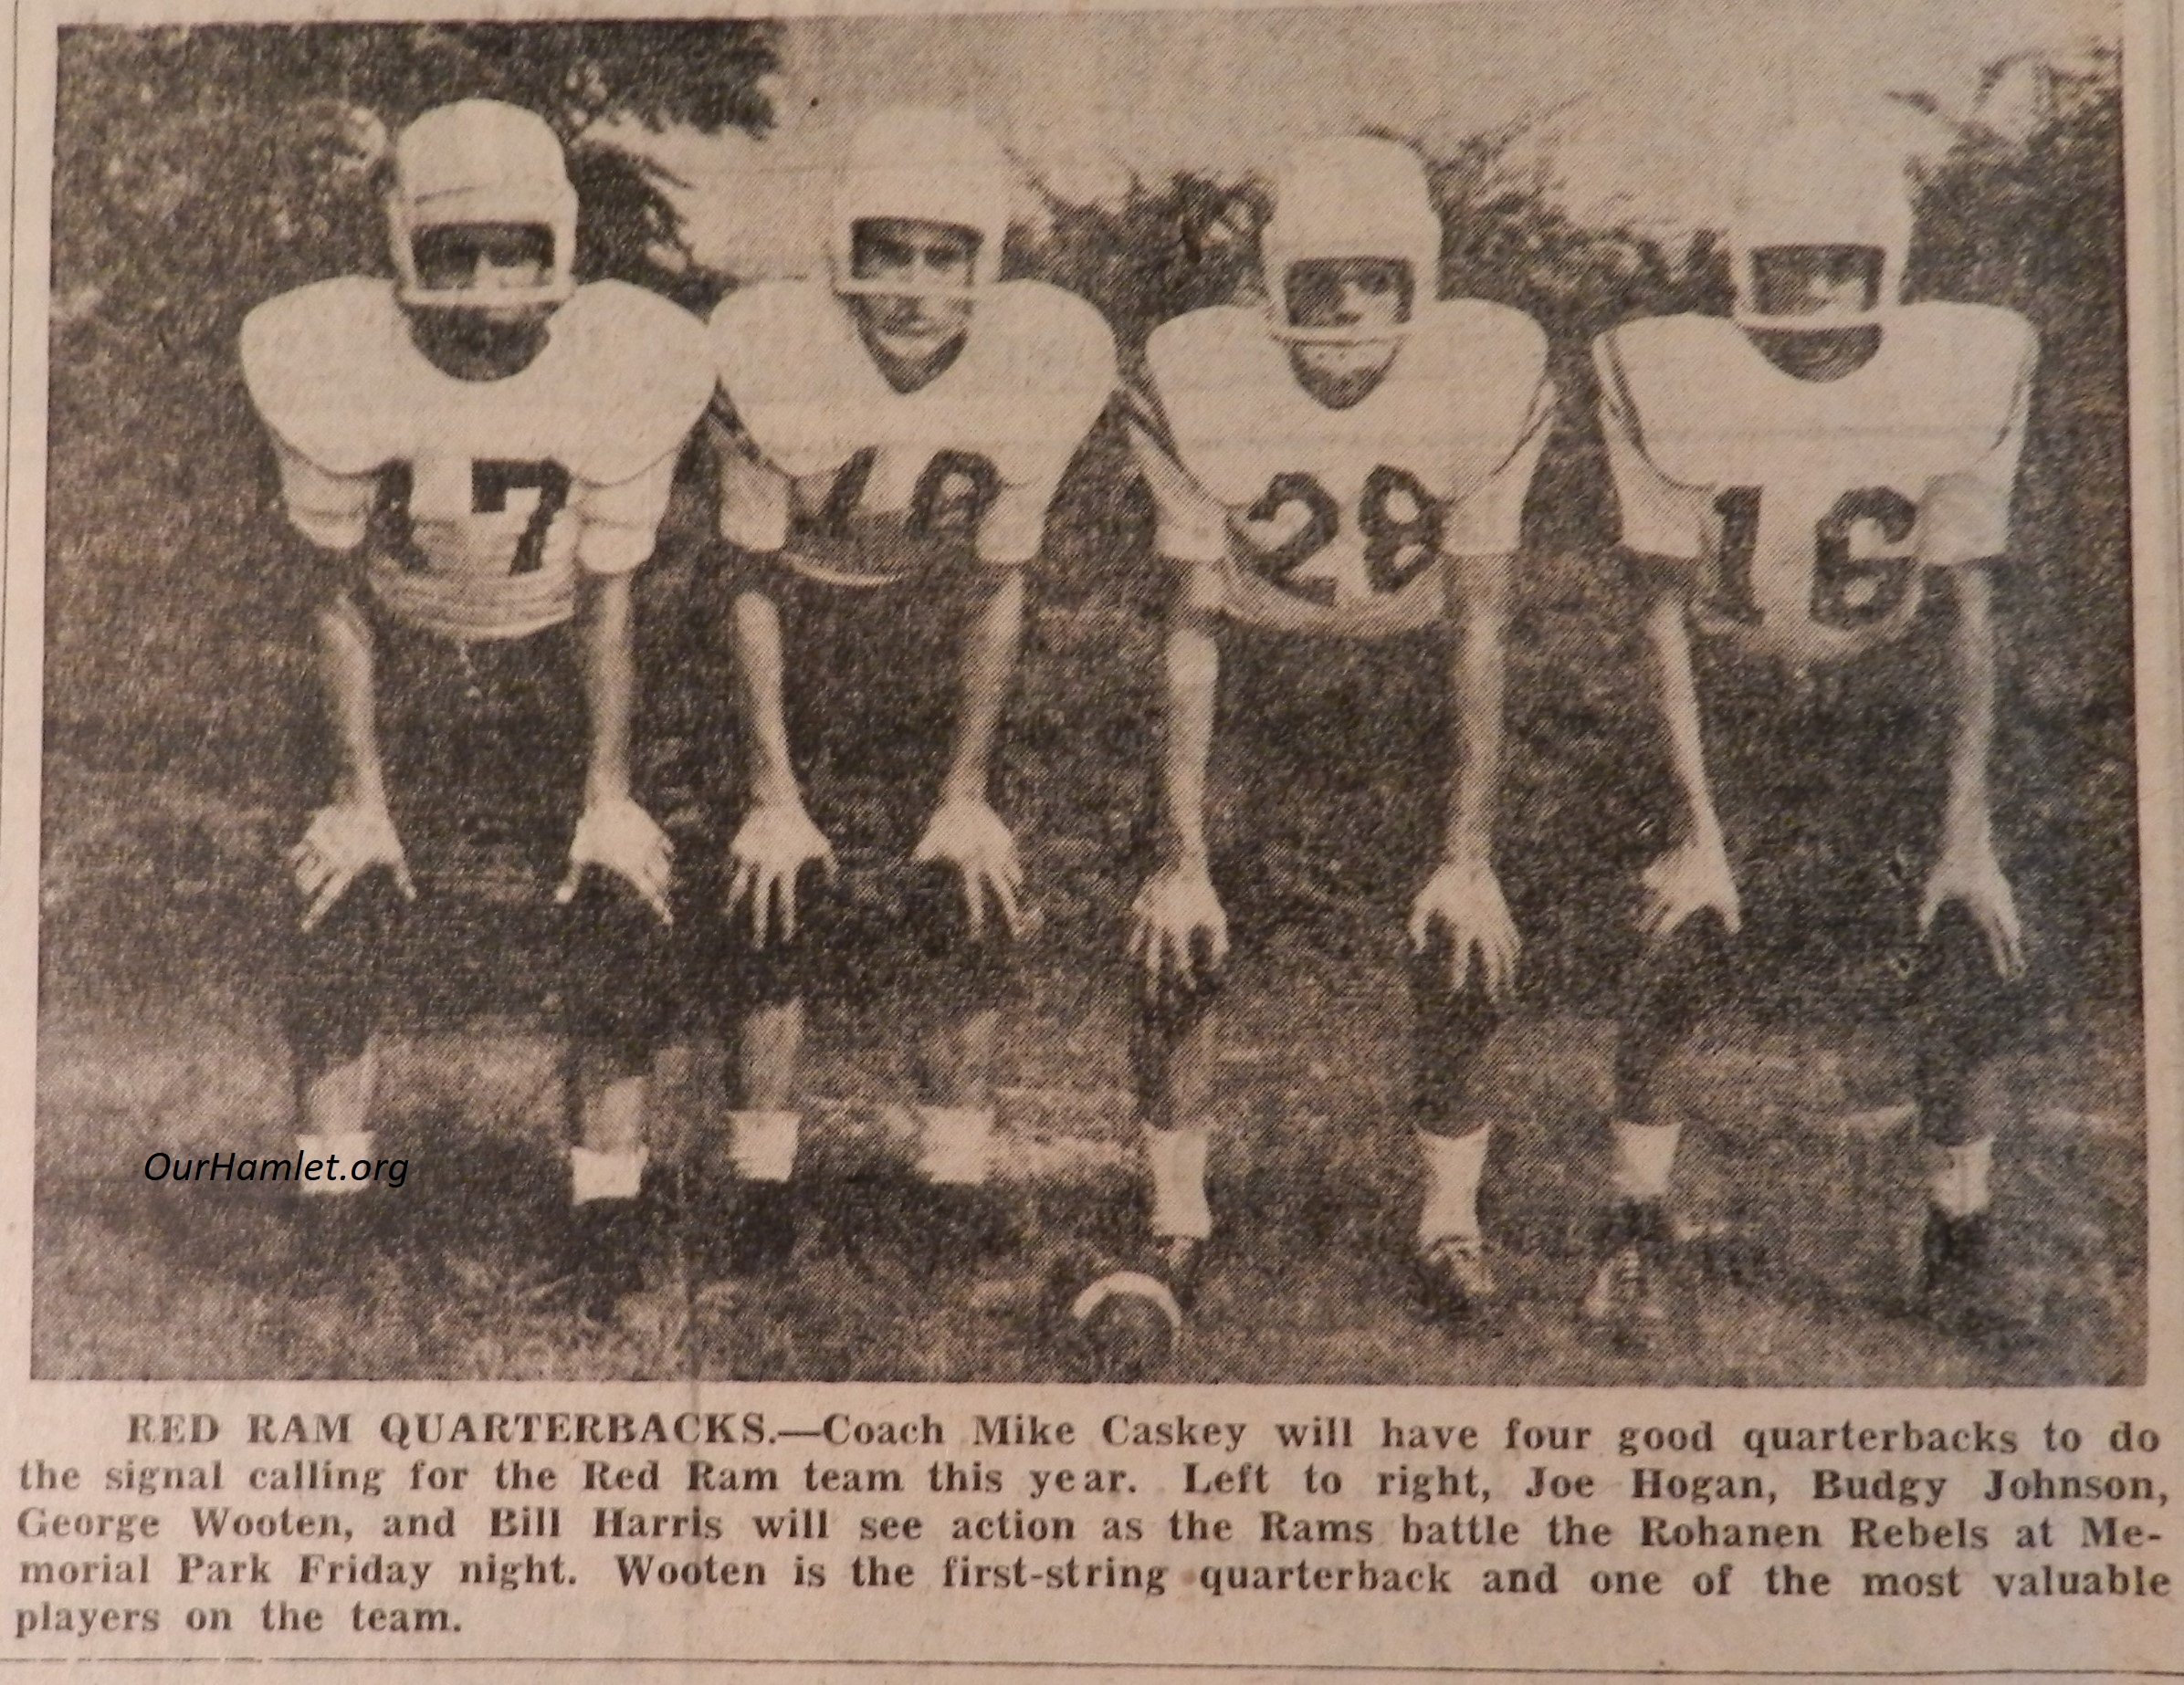 1958 Red Ram quarterbacks OH.jpg